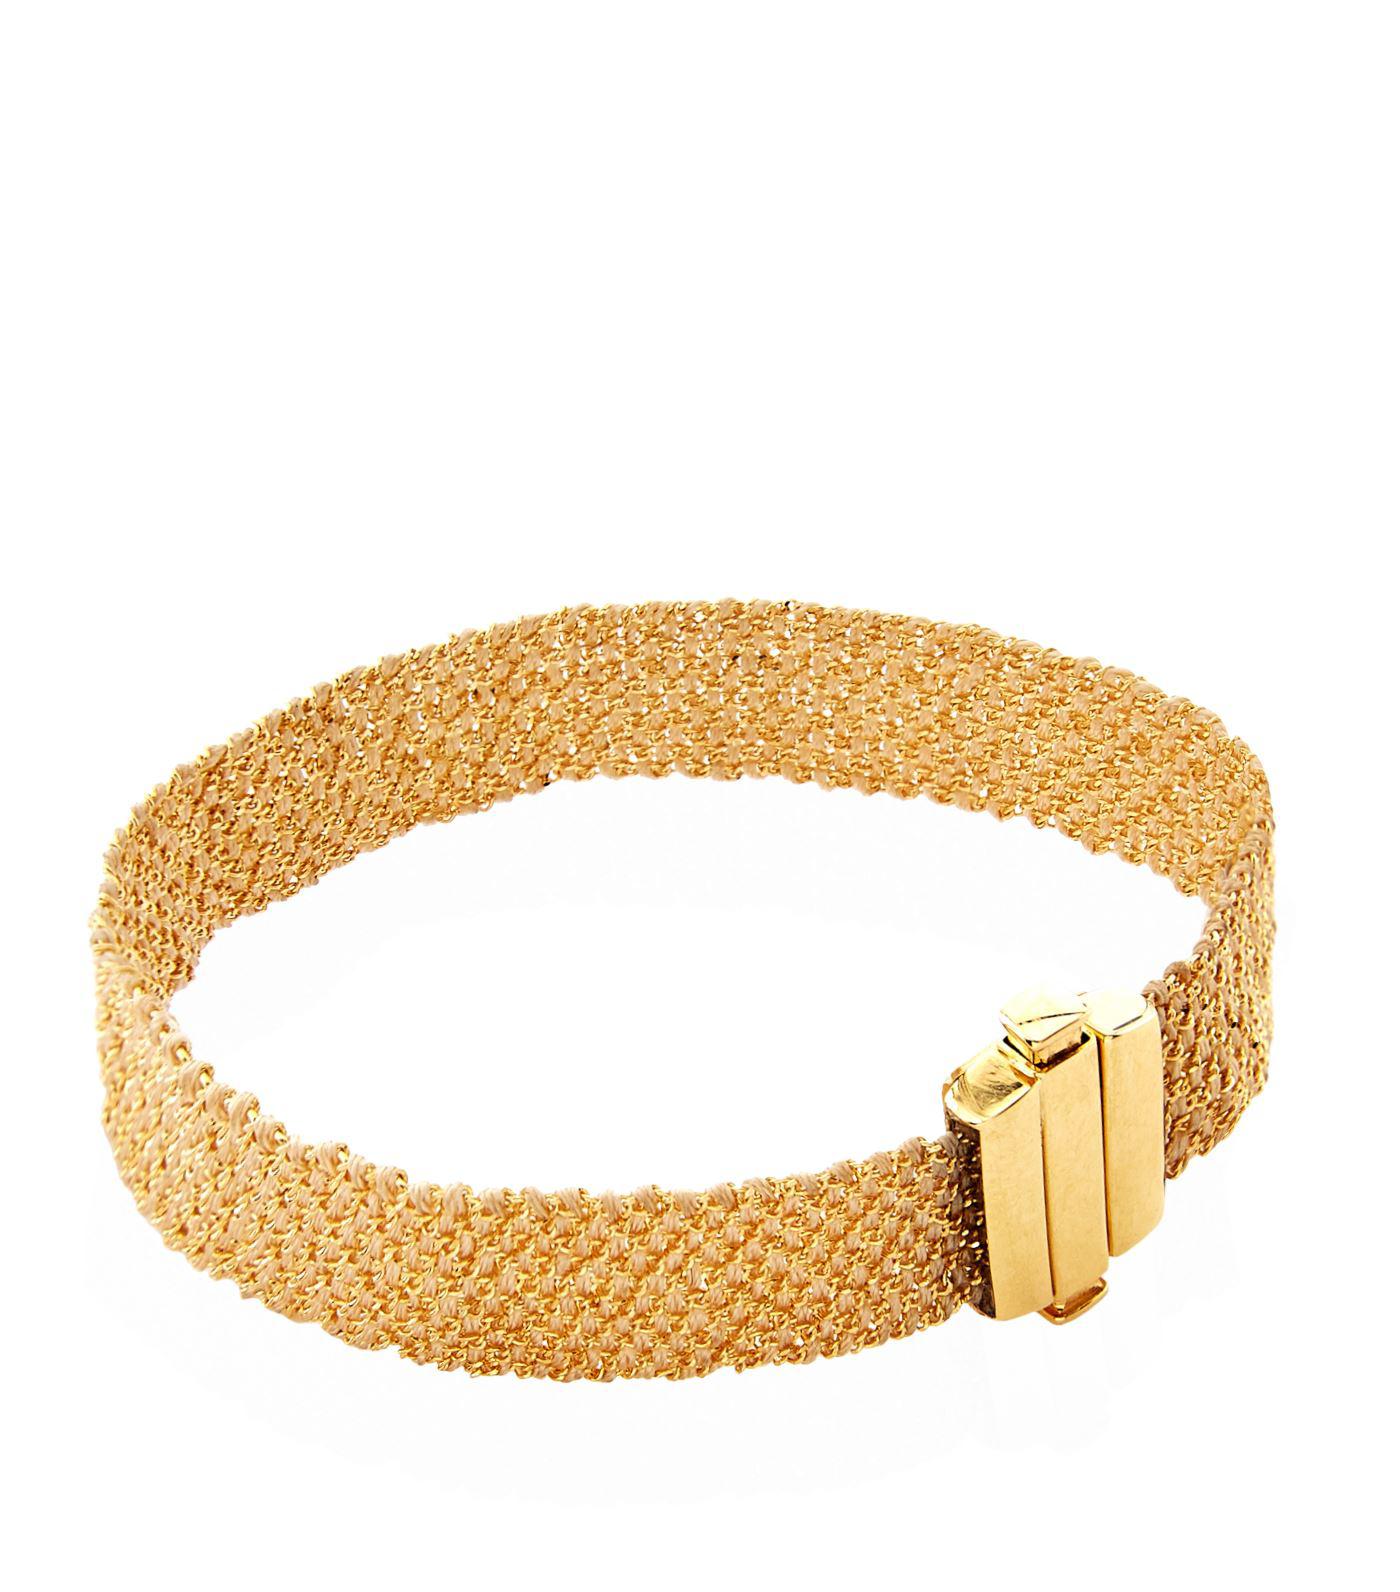 Carolina Bucci Gold And Silk Woven Bracelet in Metallic - Lyst